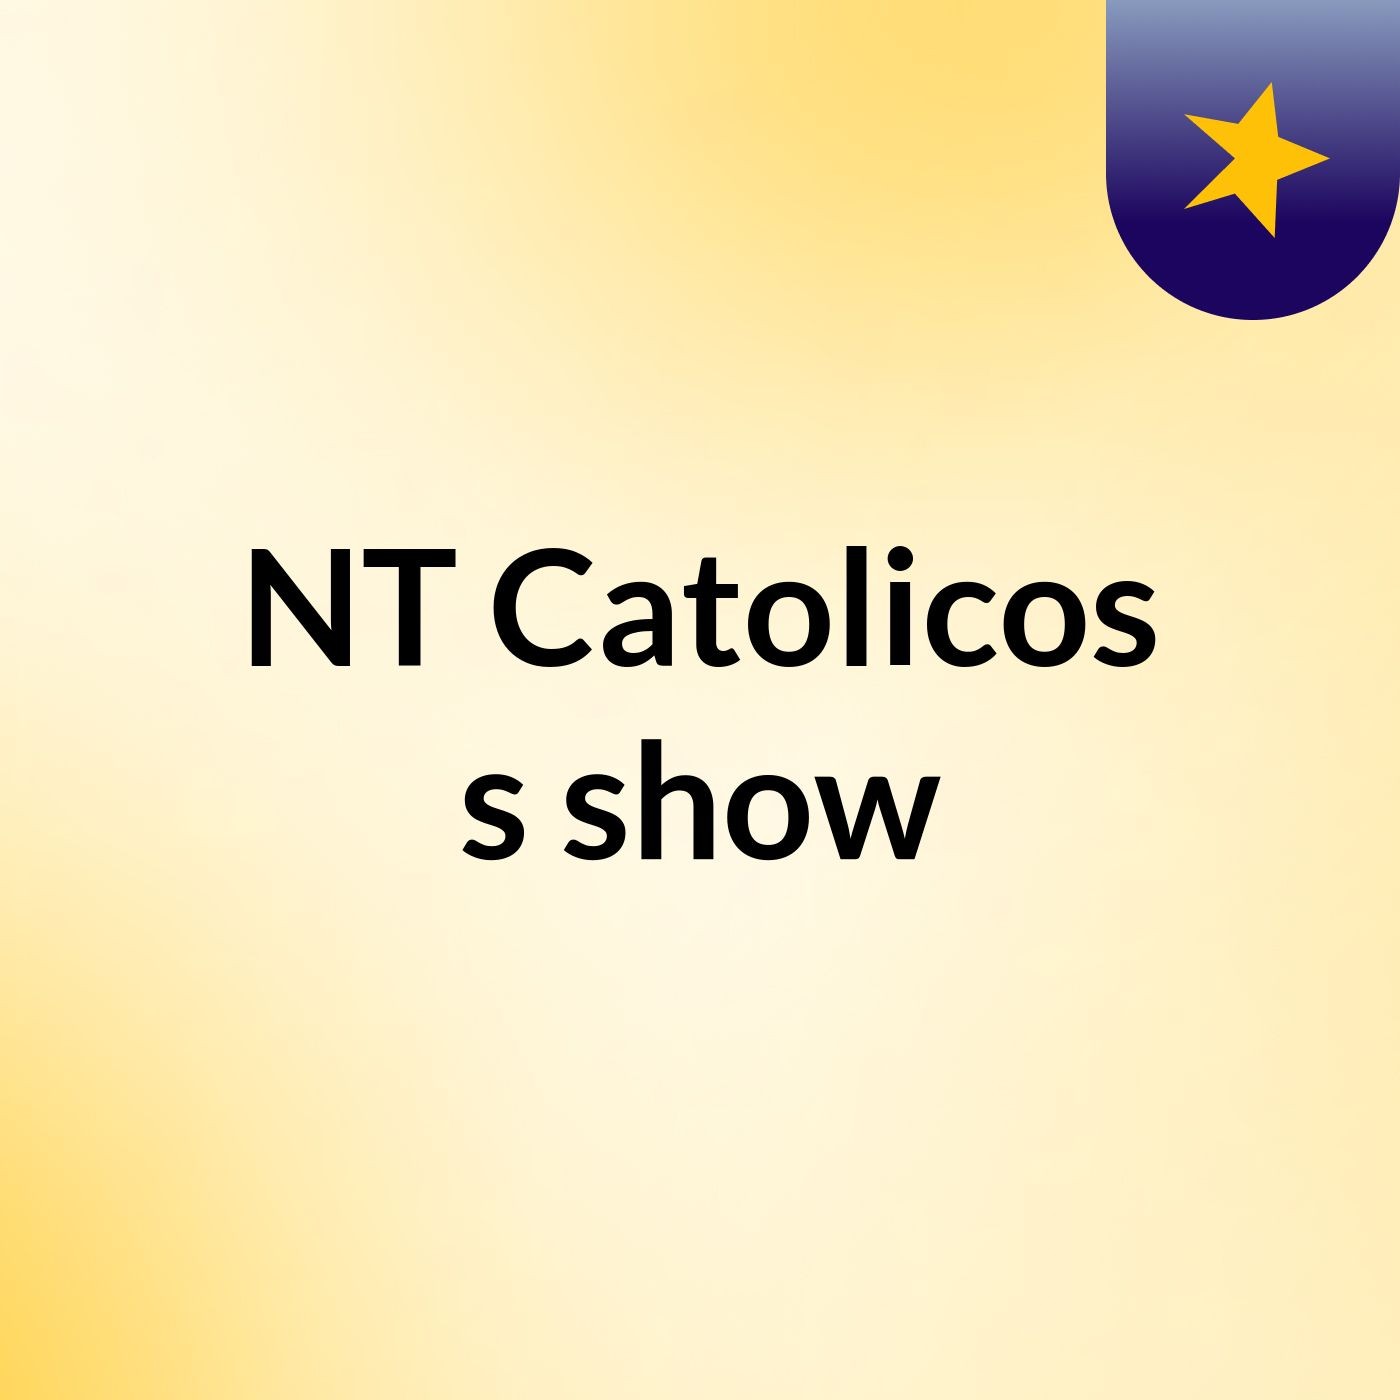 NT Catolicos's show